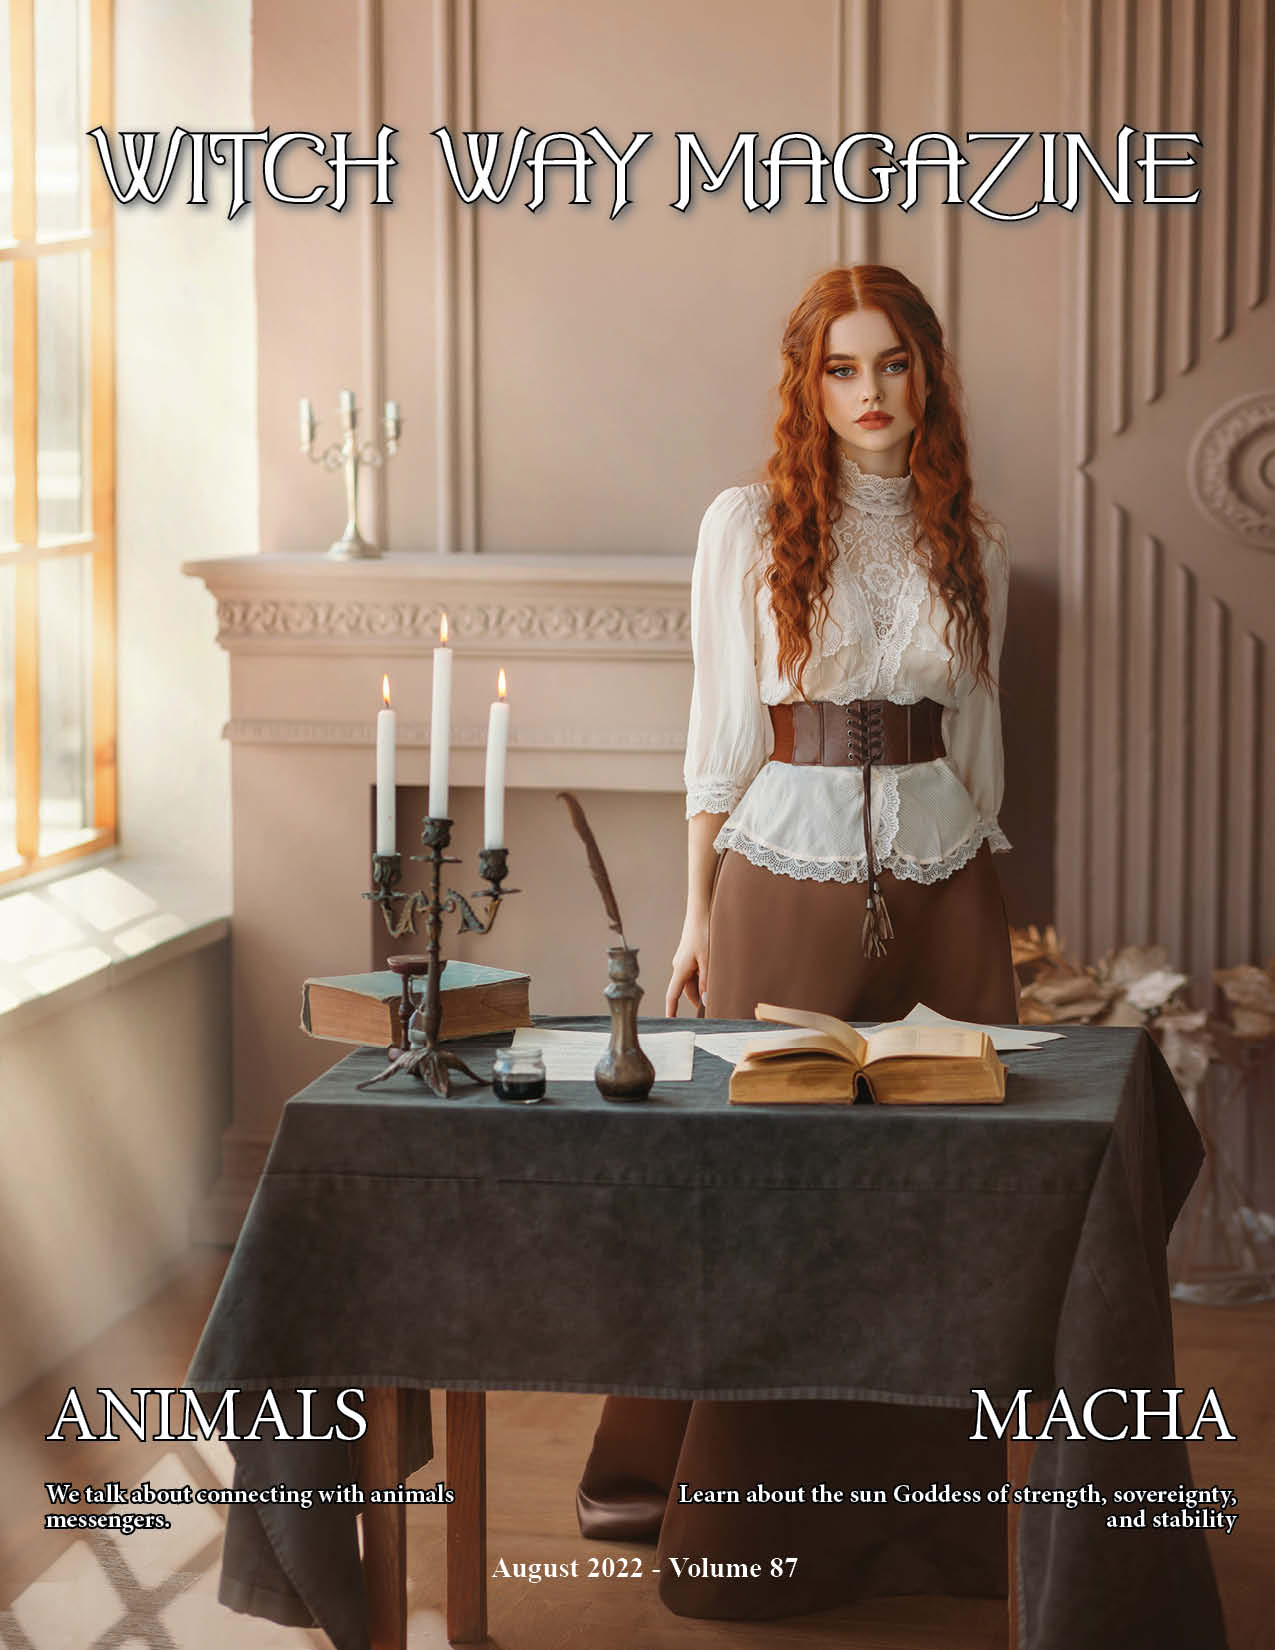 August 2022 Vol #87 - Witch Way Magazine - Issue - Digital Issue